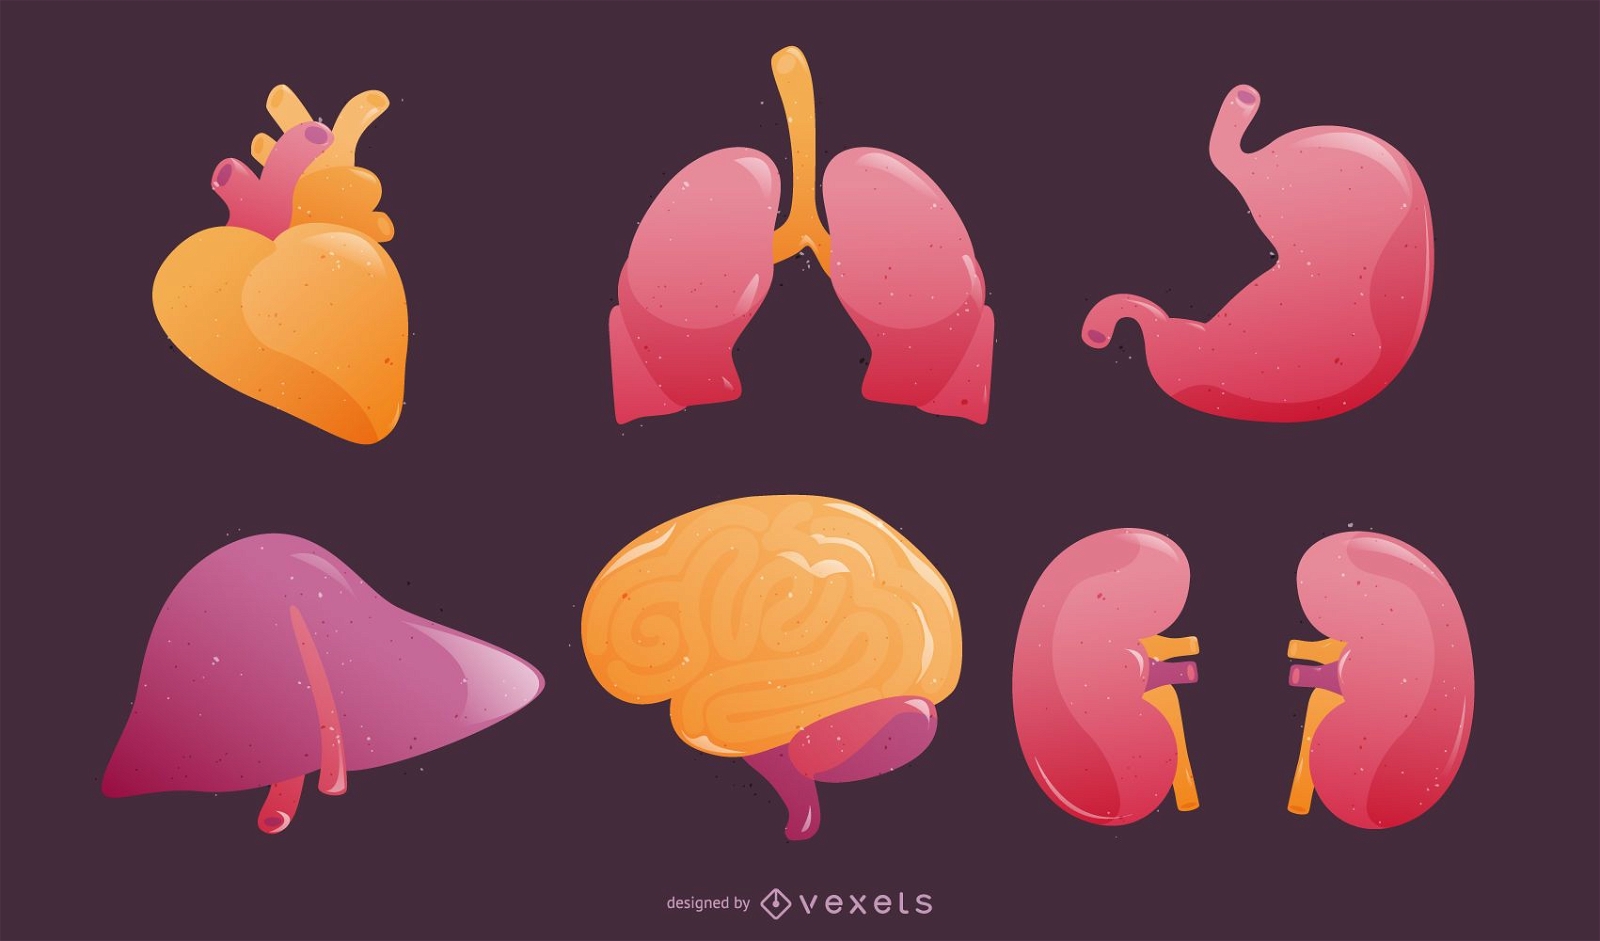 Human Organs in 3D